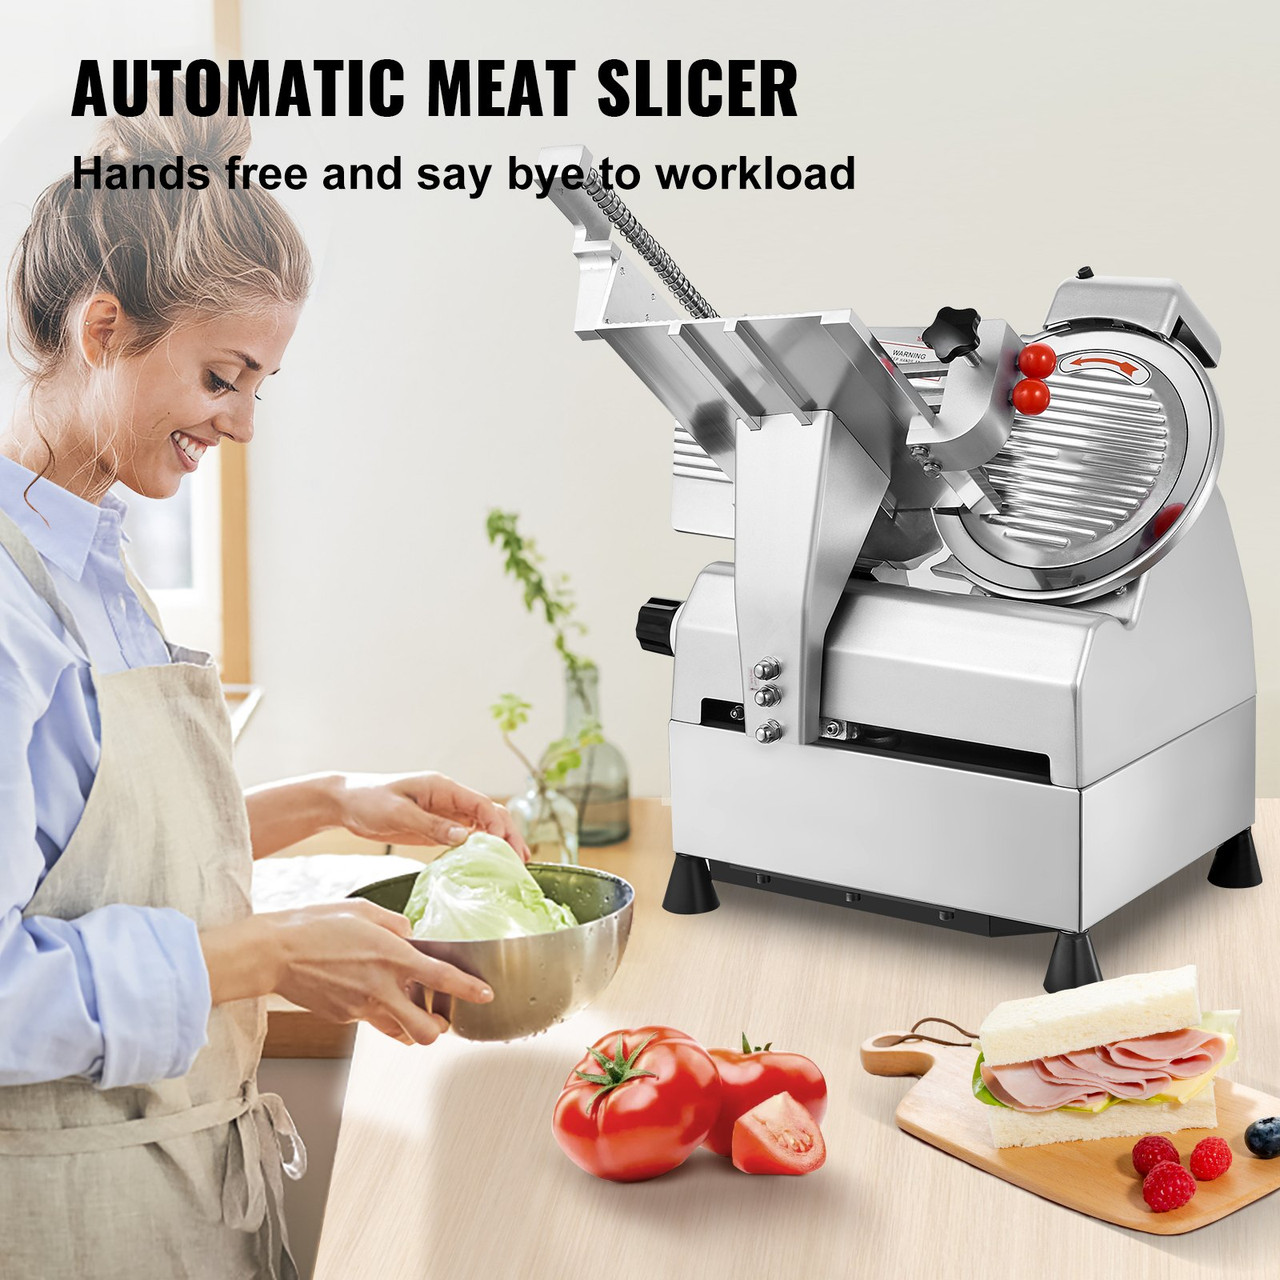 VEVOR Commercial Meat Slicer, 10 inch Electric Food Slicer, 240W Frozen Meat Deli Slicer, Premium Chromium-Plated Steel Blade Semi-Auto Meat Slicer